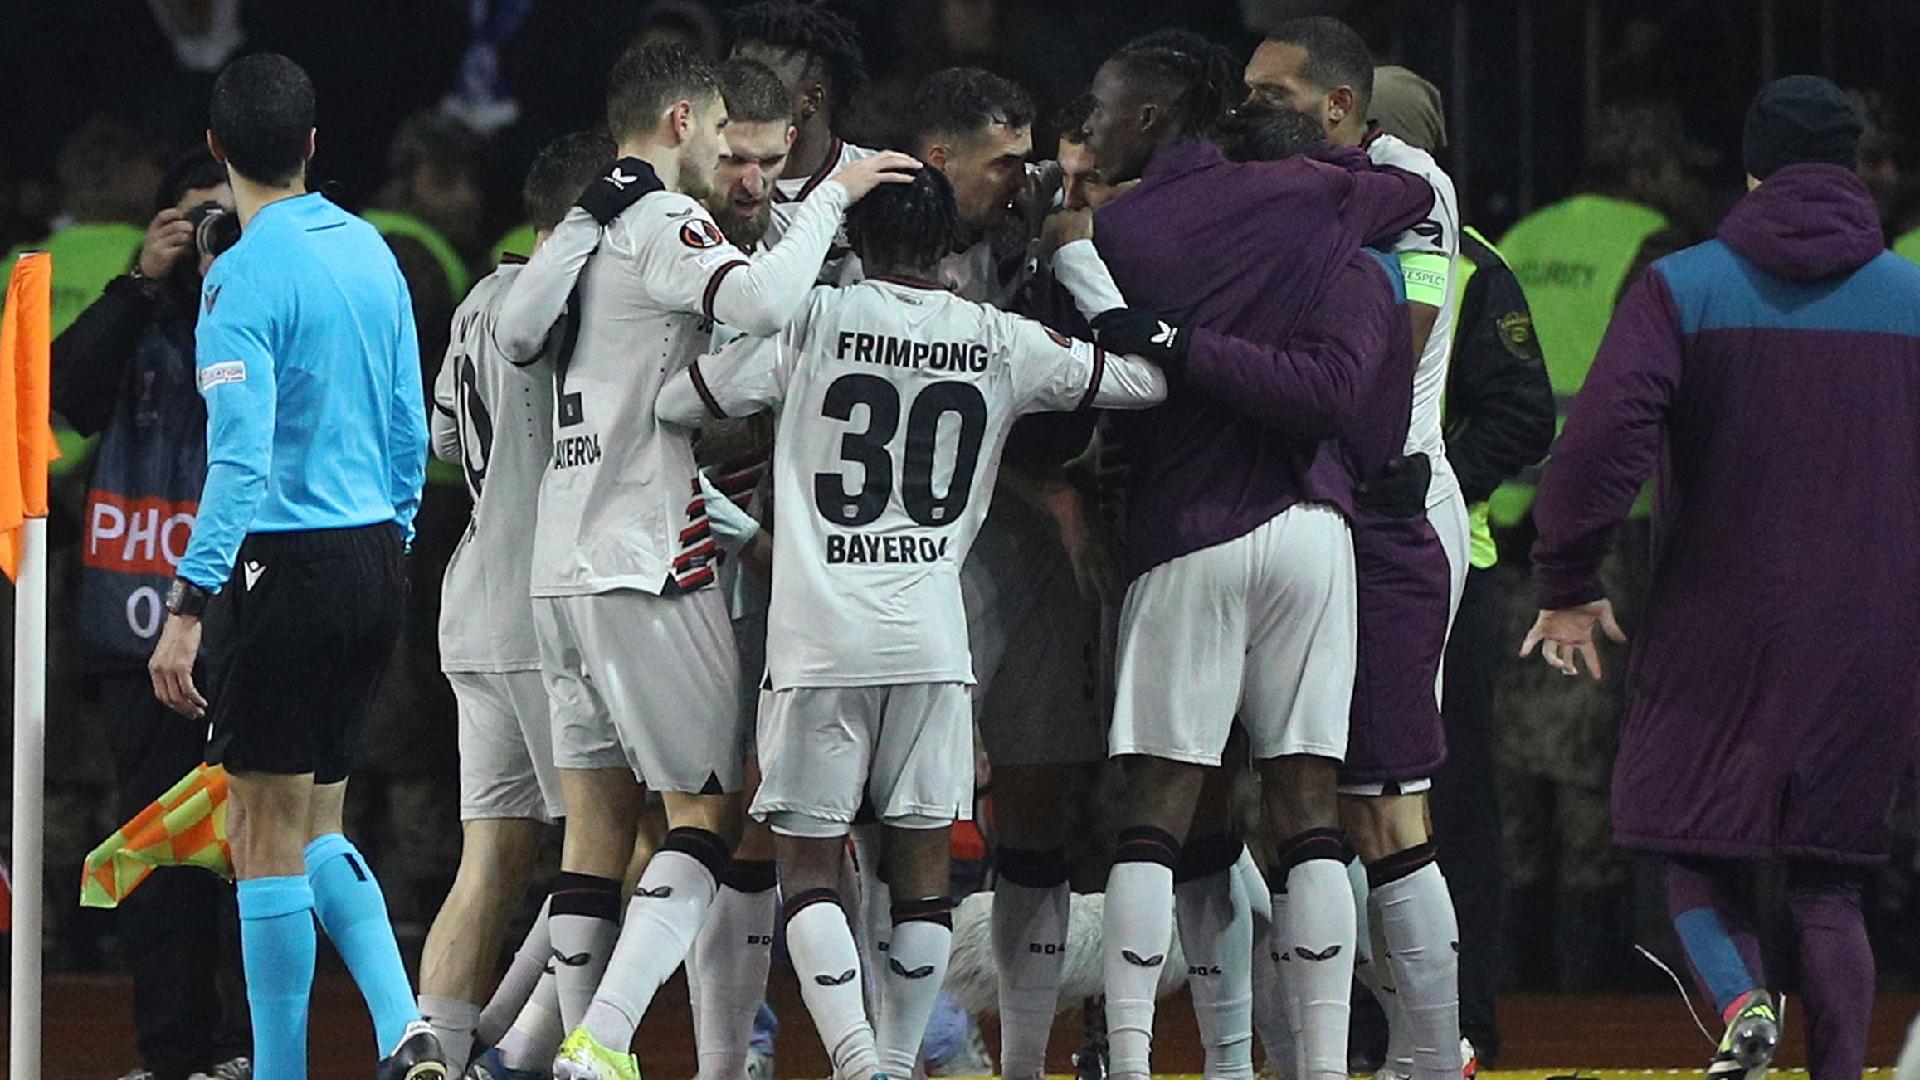 West Ham suffer narrow defeat in first leg of Europa League tie against  Freiburg